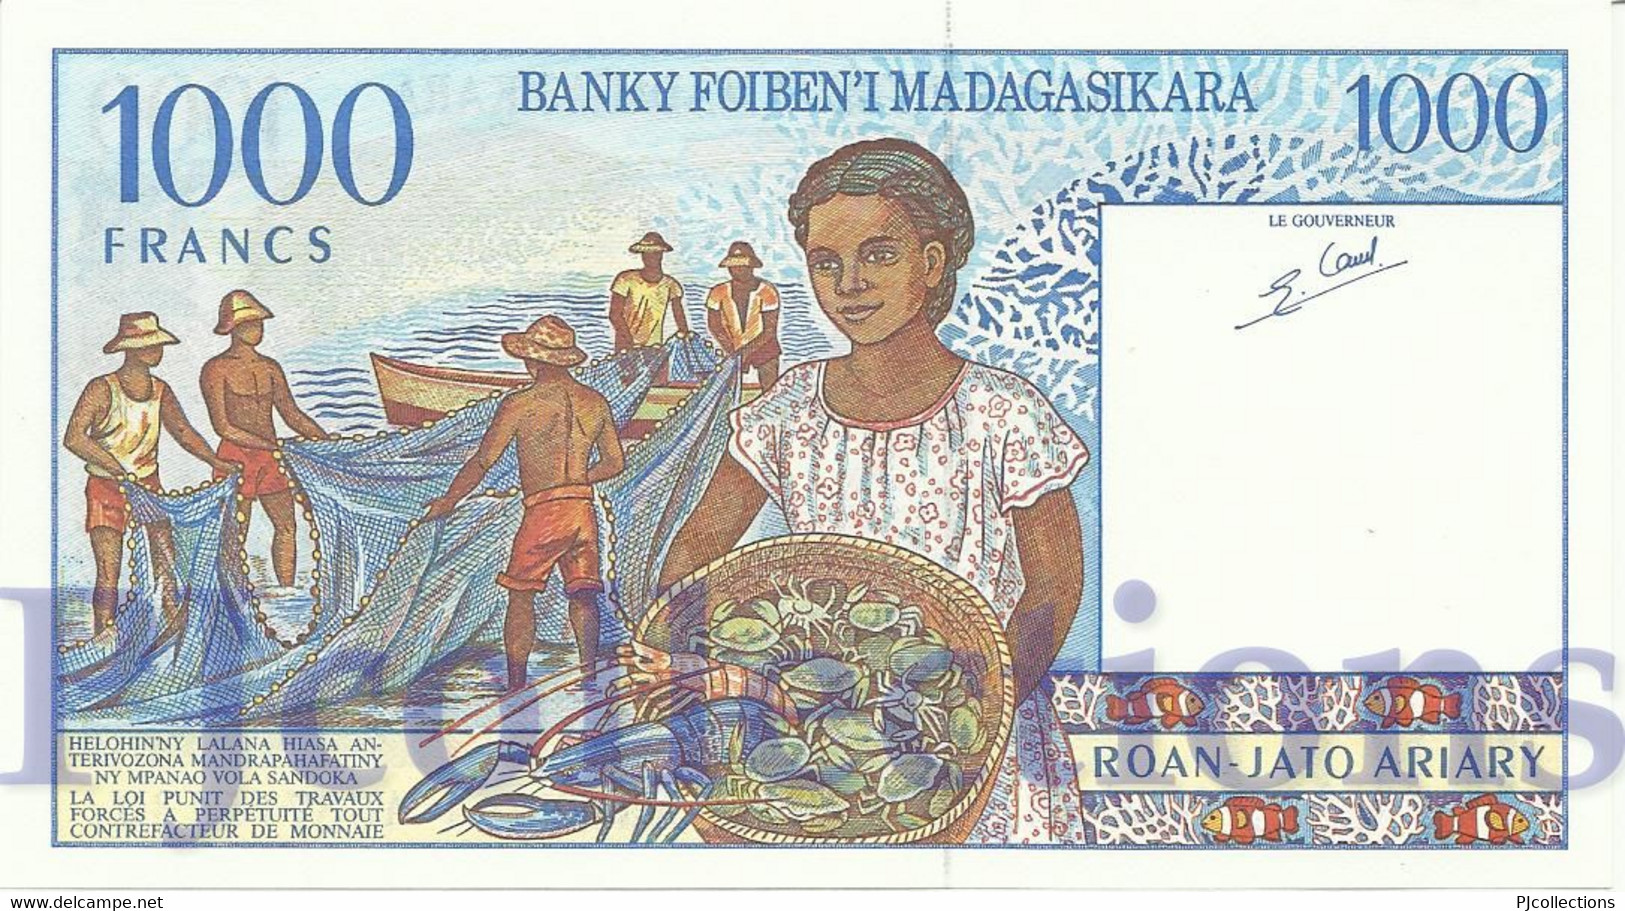 MADAGASCAR 1000 FRANCS 1994 PICK 76b UNC PREFIX "C" - Madagascar